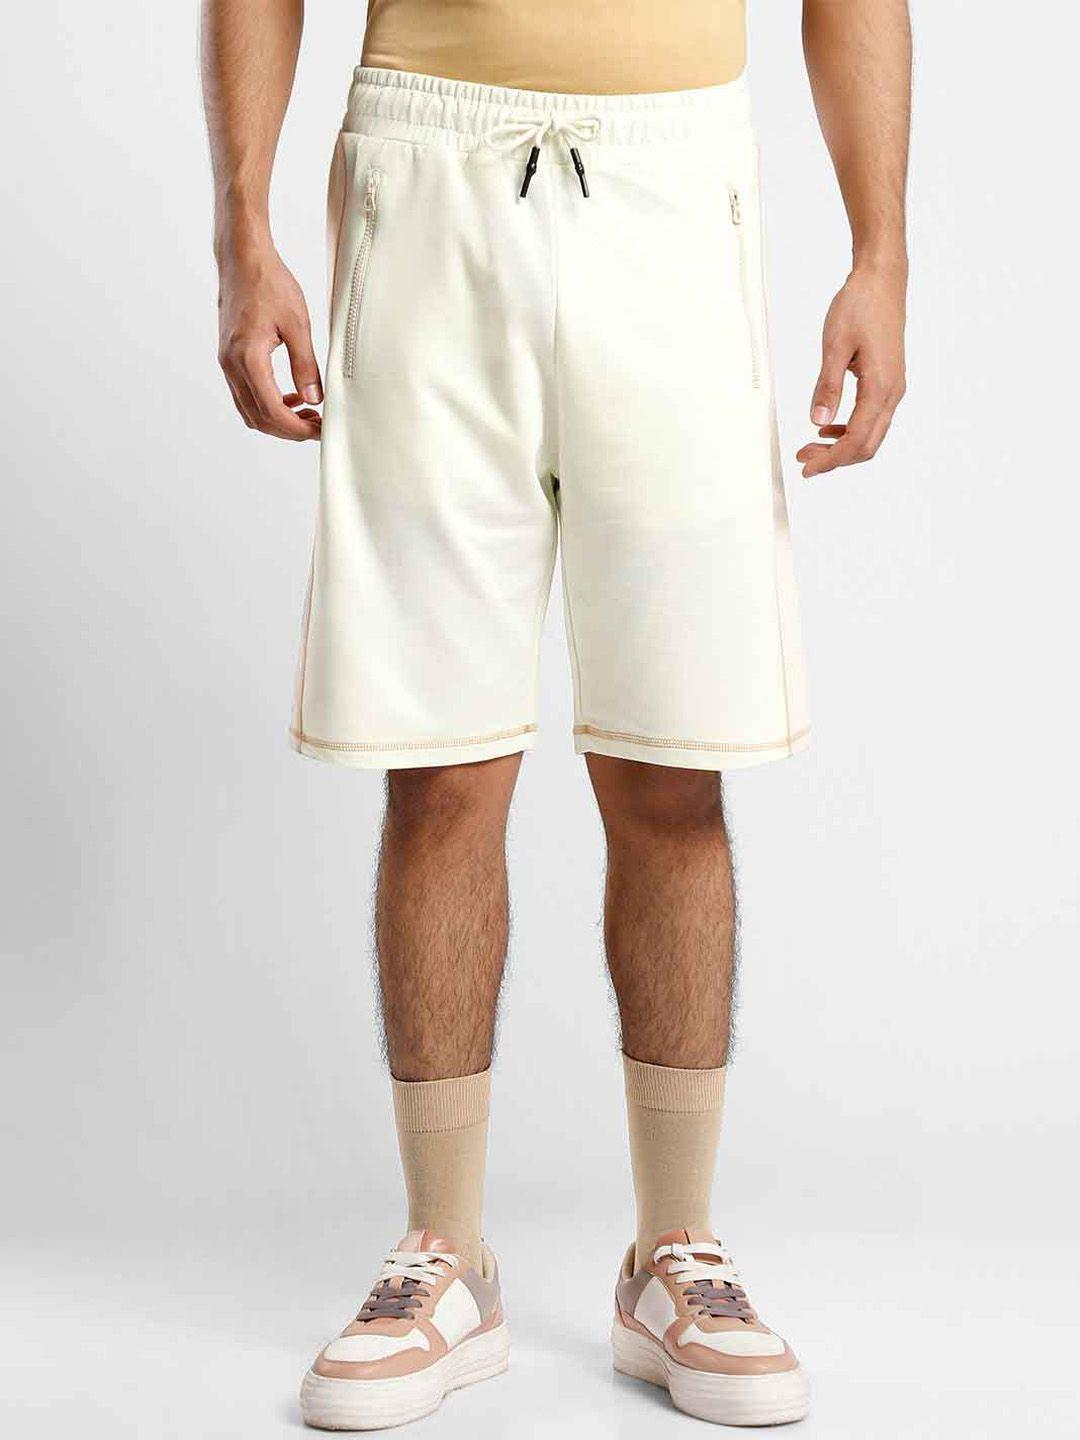 nobero-men-off-white-shorts